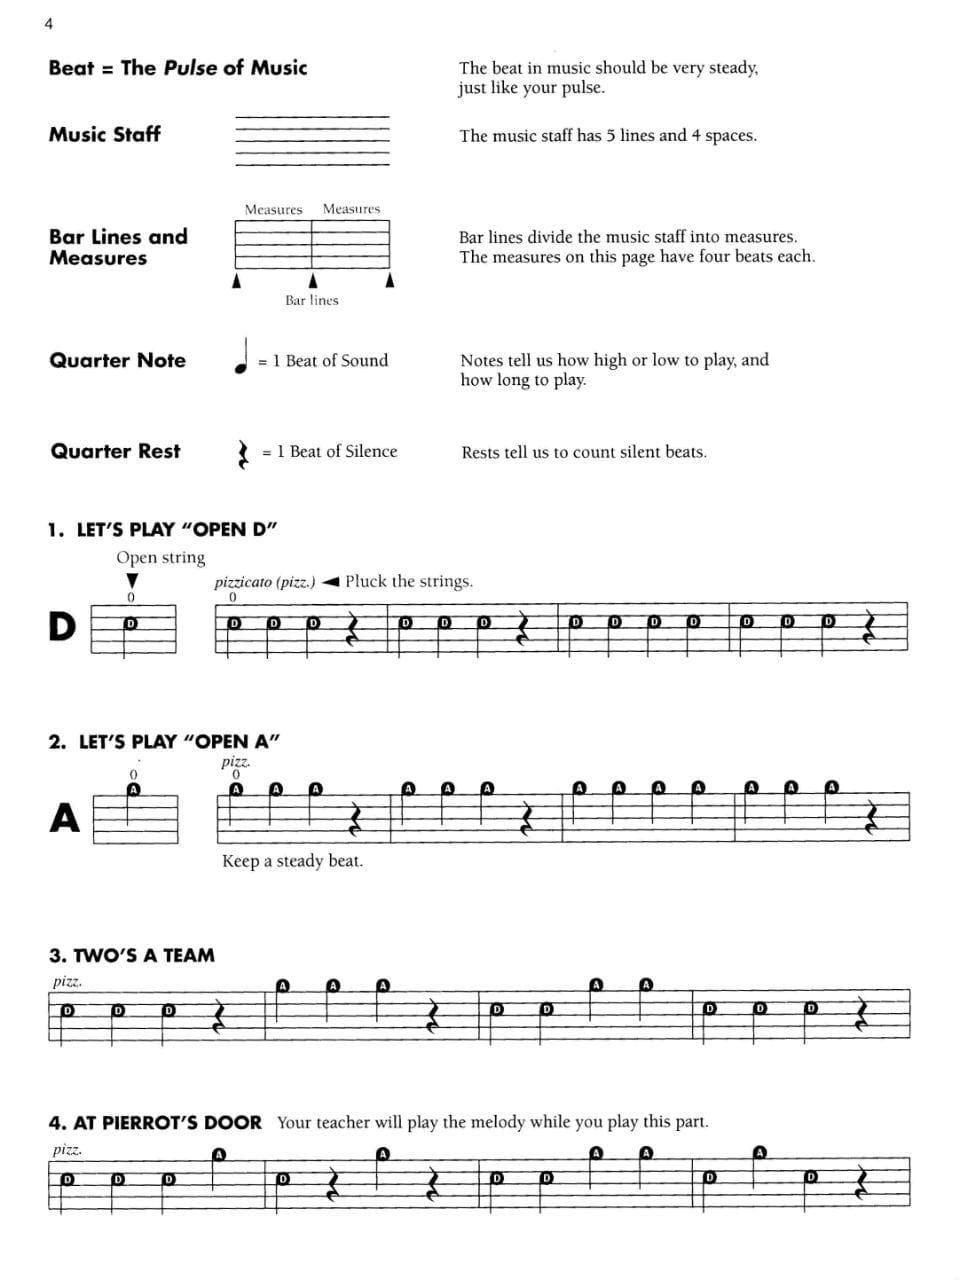 Essential Elements for Strings, Book 1 - Viola - by Allen/Gillespie/Hayes - Hal Leonard Publication